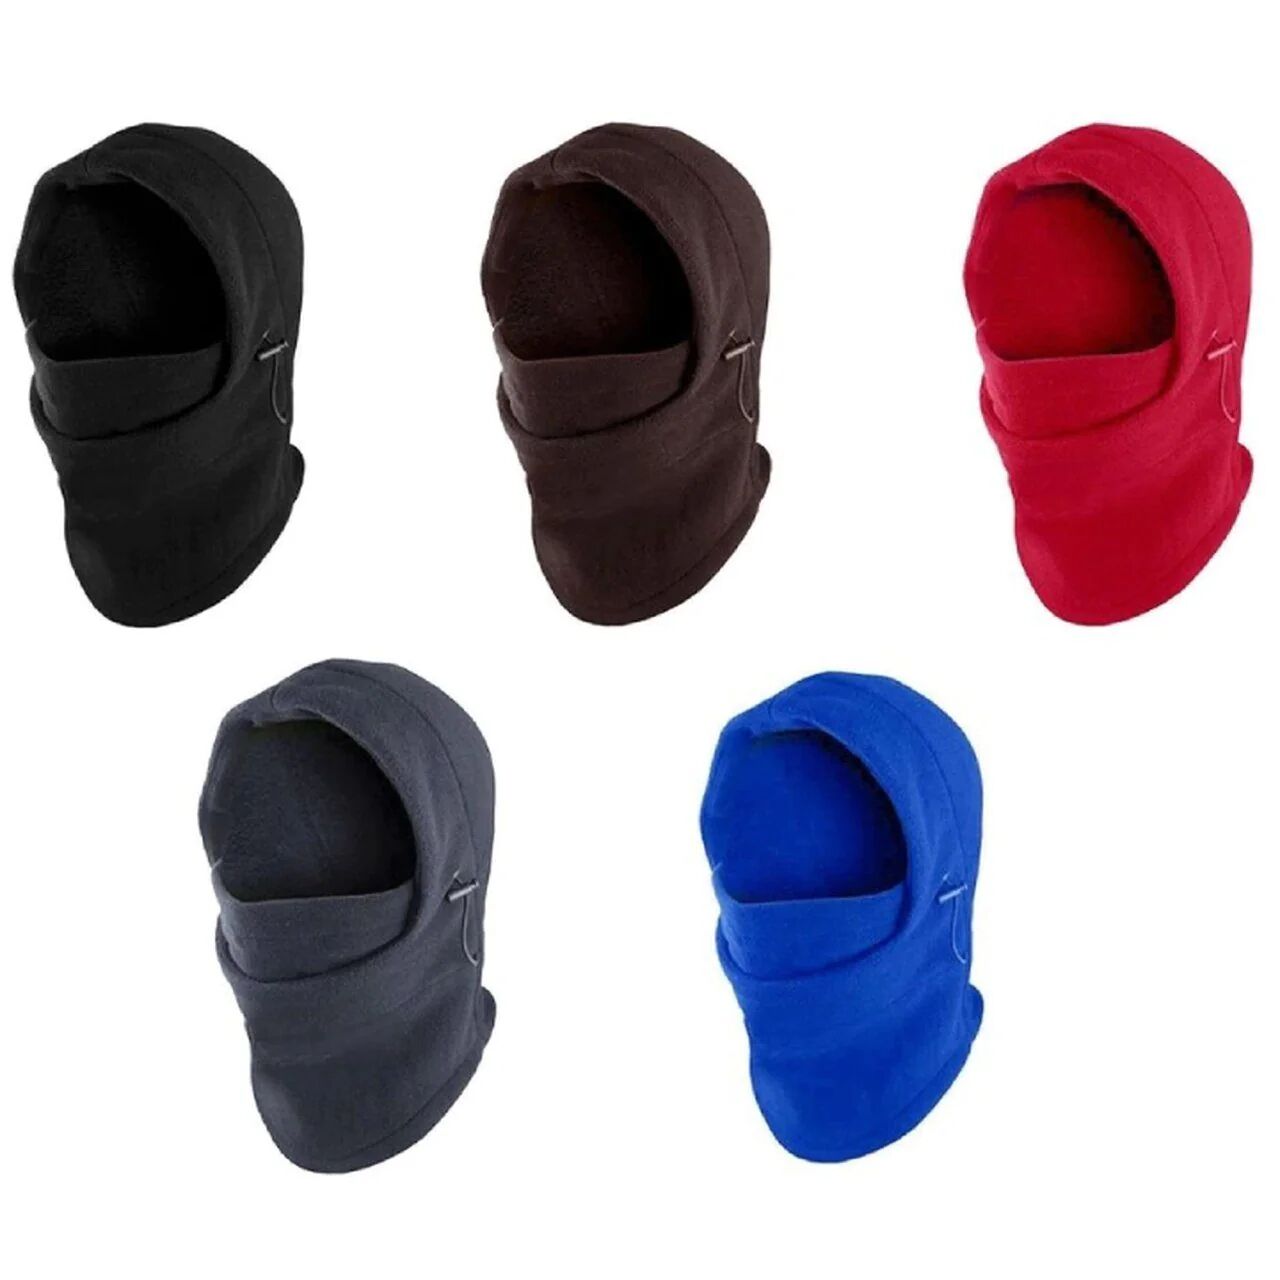 DailySale 3-Pack: Unisex Fleece Balaclava Winter Hat Mask